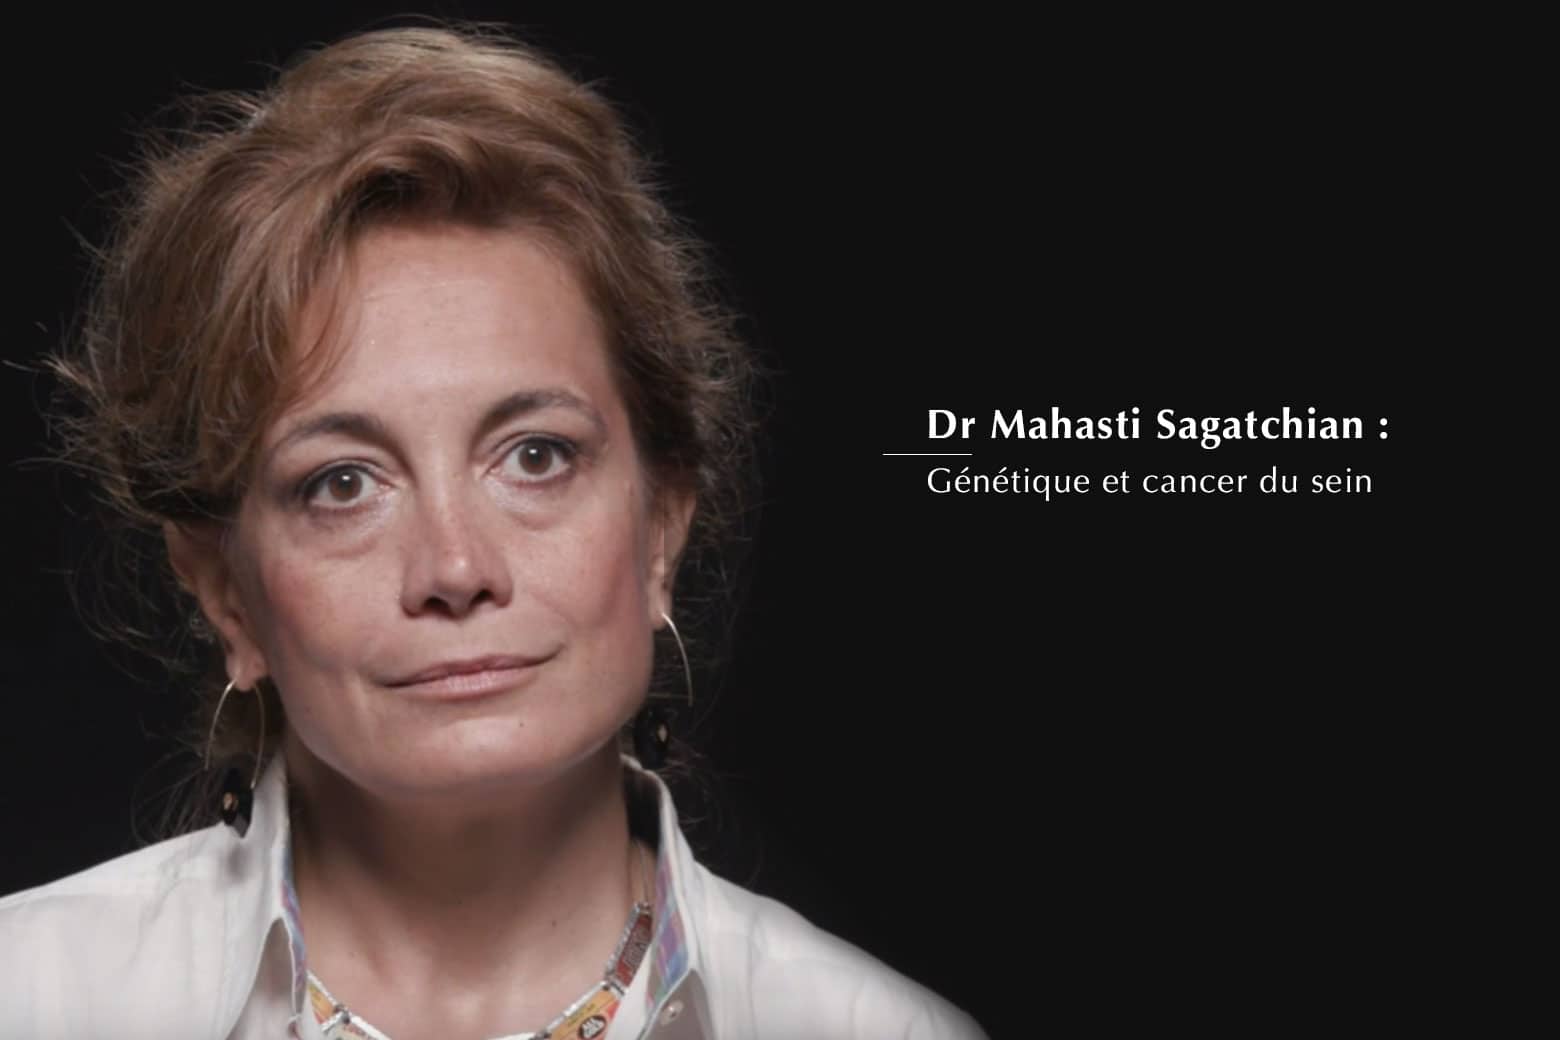 Dr. MAHASTI SAGHATCHIAN - Genetics and breast cancer